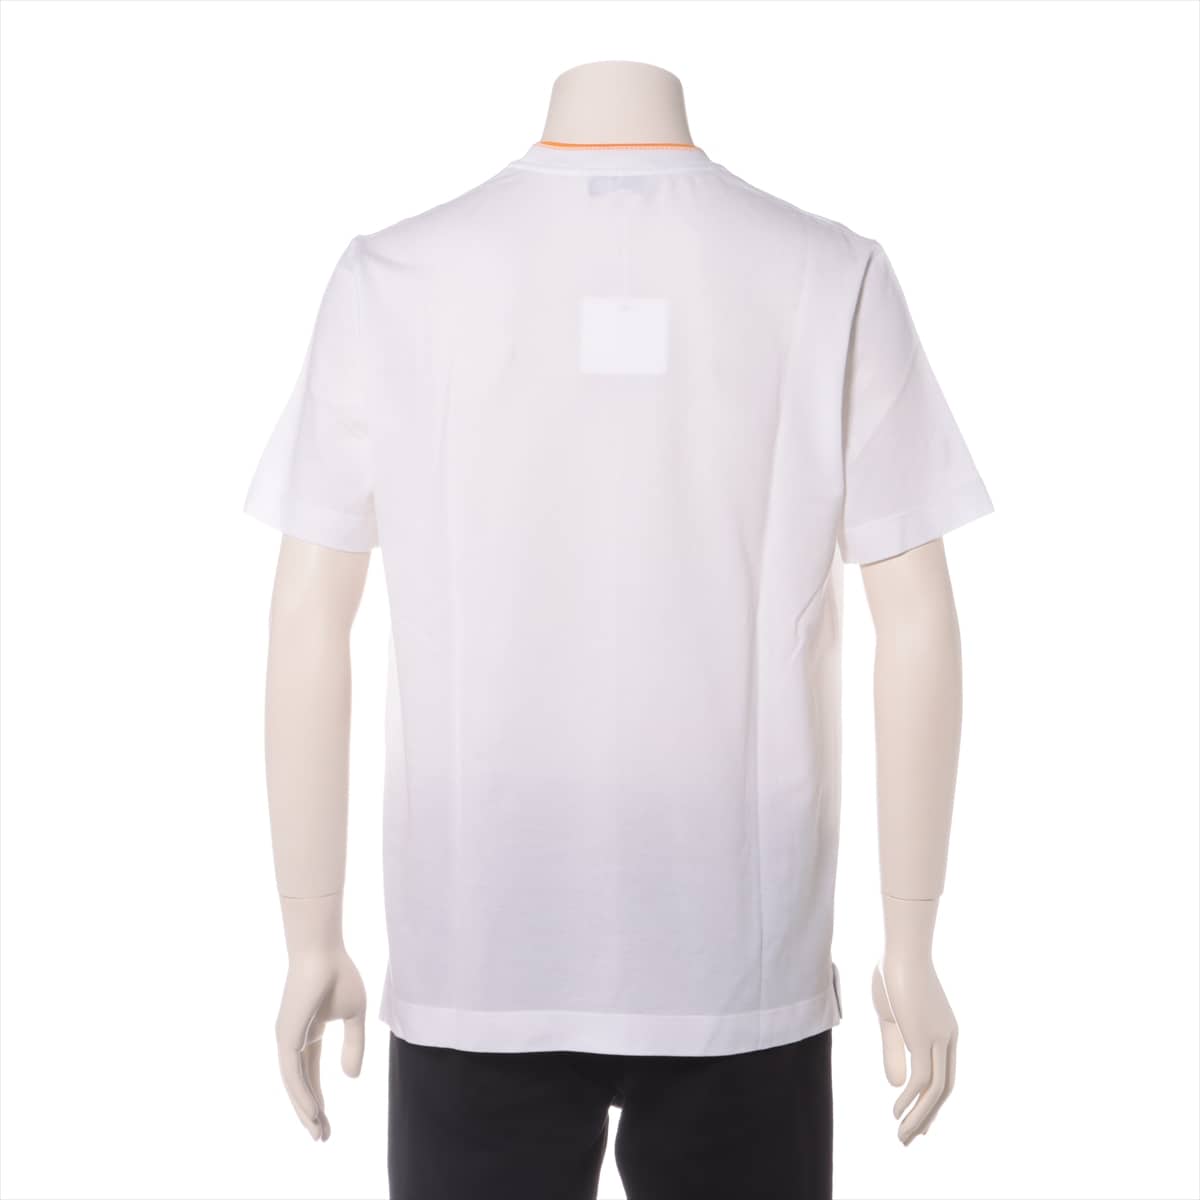 Hermès Cotton T-shirt M Men's White